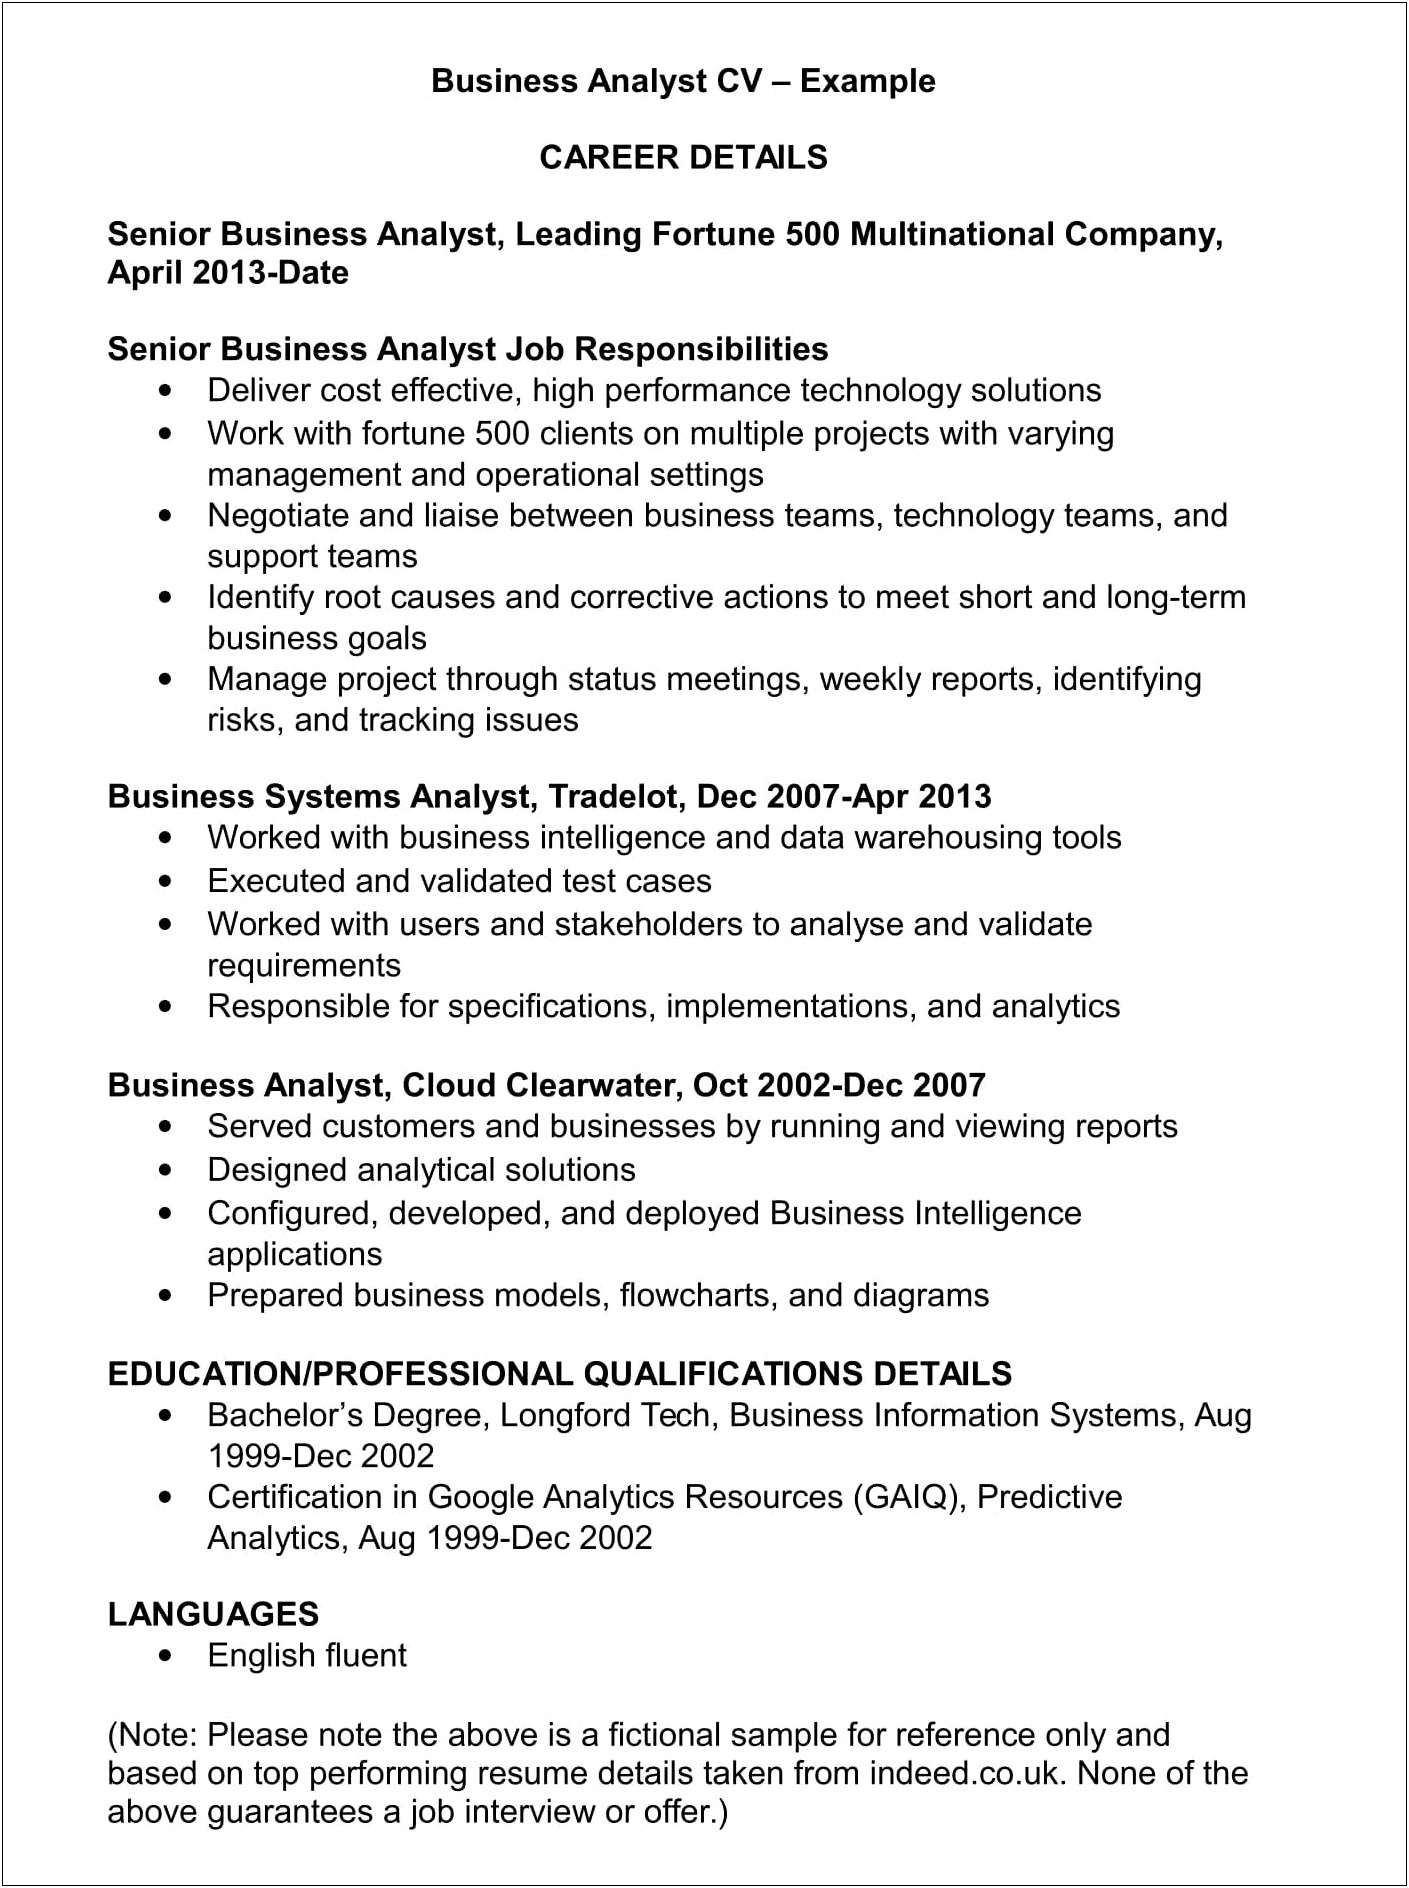 Is Google Analytics Certification Good For Resume